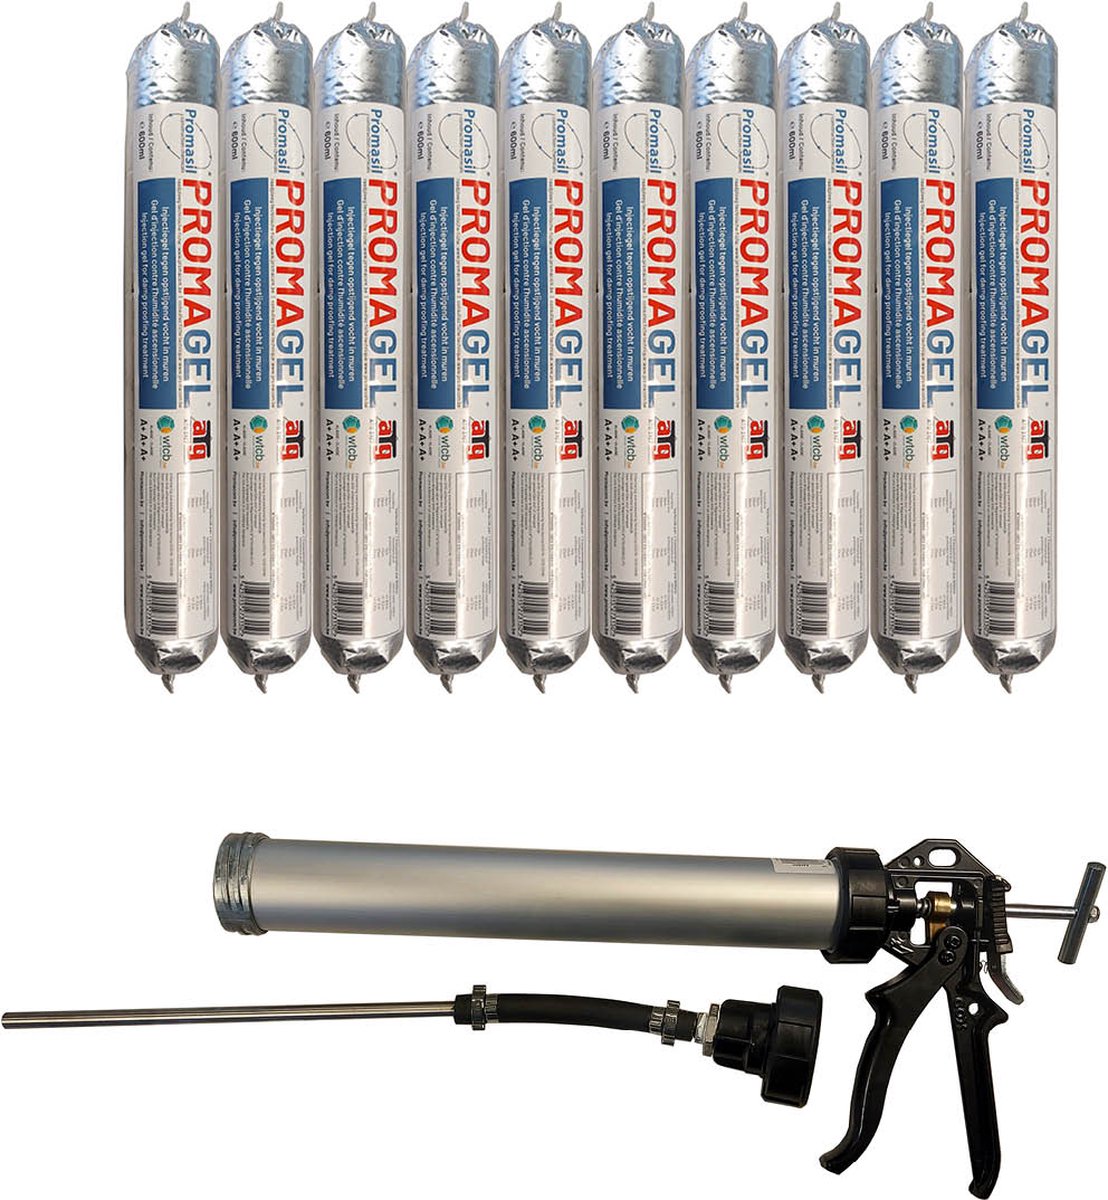 Promasil Promagel set - Injectiegel Opstijgend vocht worst 600 ml 10 stuks ATG nr 3107 (kwaliteitscertificaat) - WTCB A+A+A+ (hoogste kwaliteit) + professioneel injectiepistool - Promasil